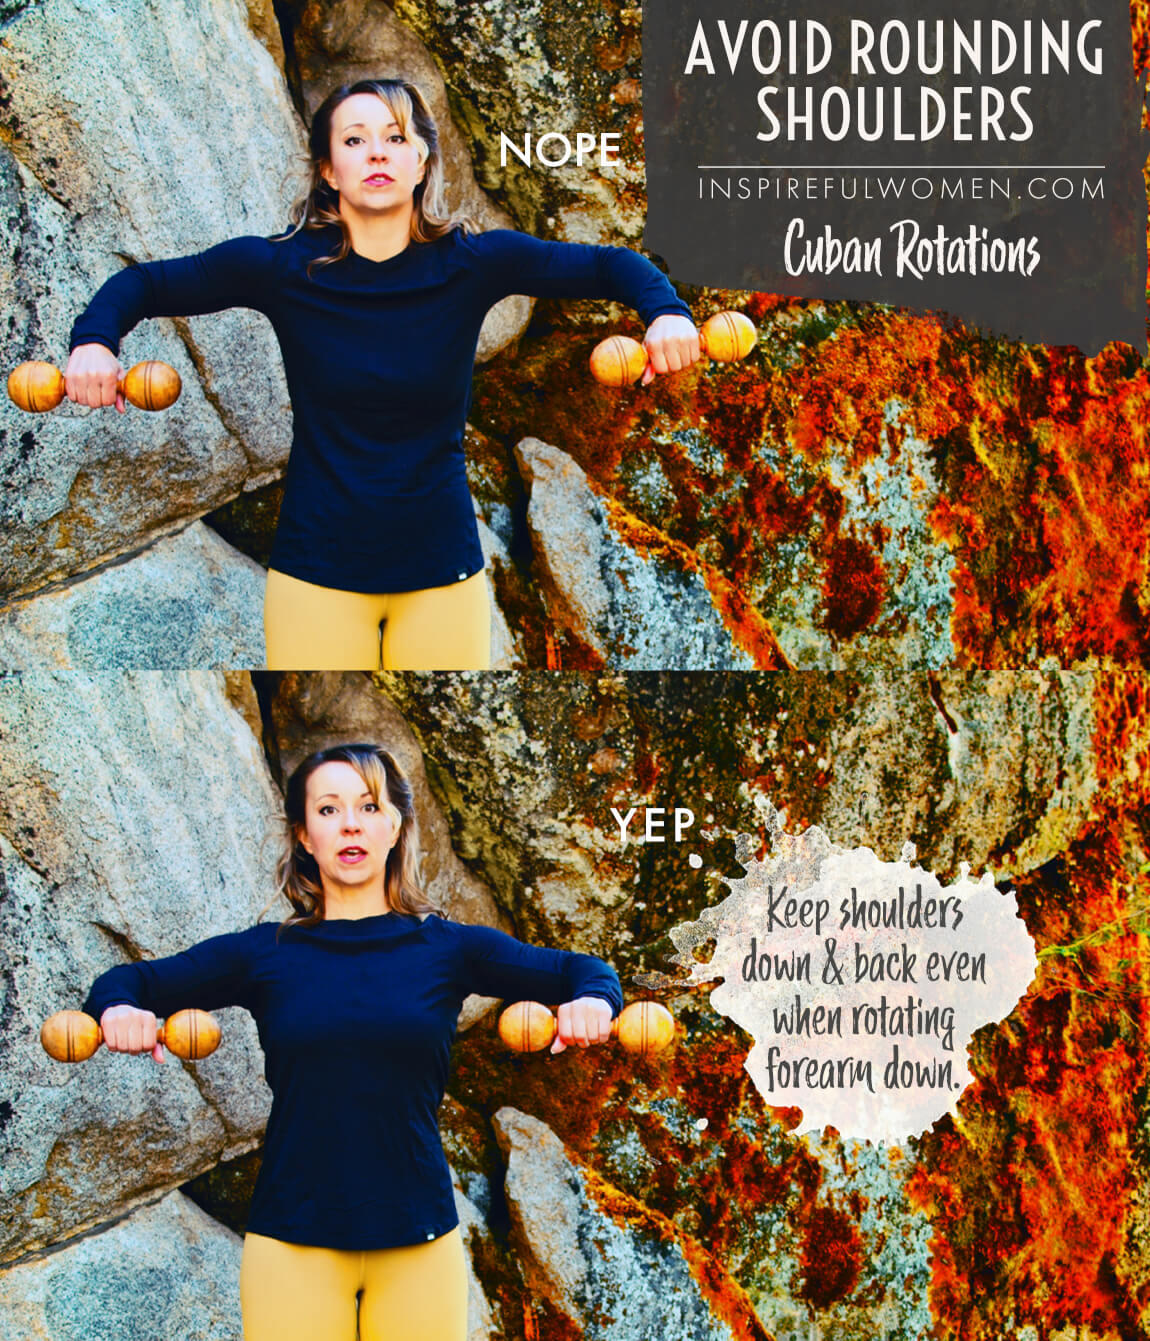 avoid-rounding-shoulders-cuban-dumbbell-external-rotation-shoulder-exercise-proper-form